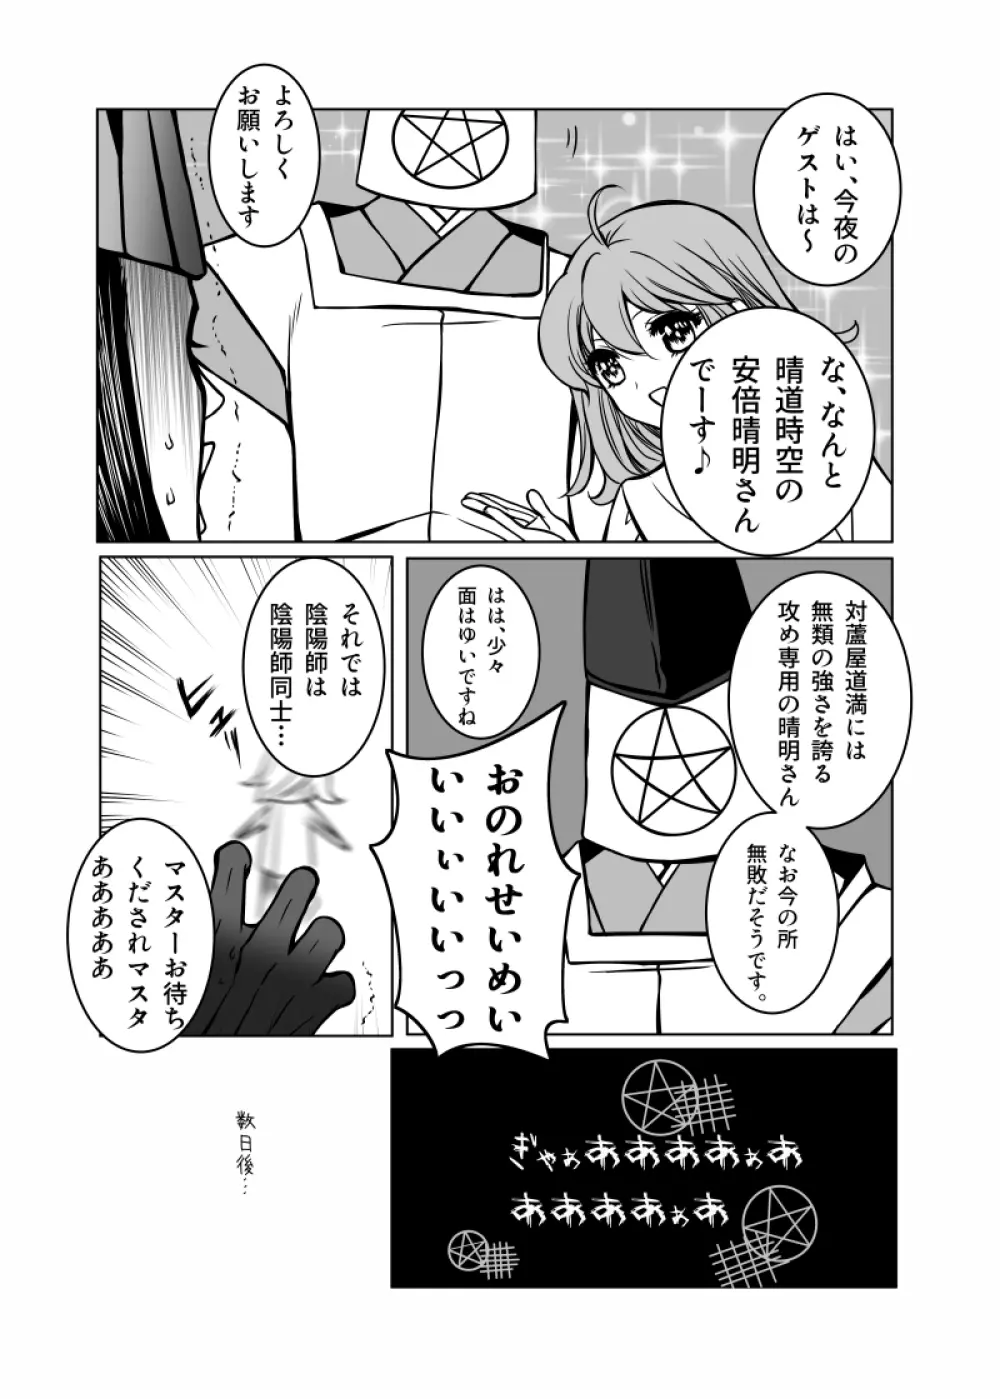 [AMeganei)] Rin guda ♀ matome ⑬[18 kin]jōkan)fate/Grand Order) 23ページ